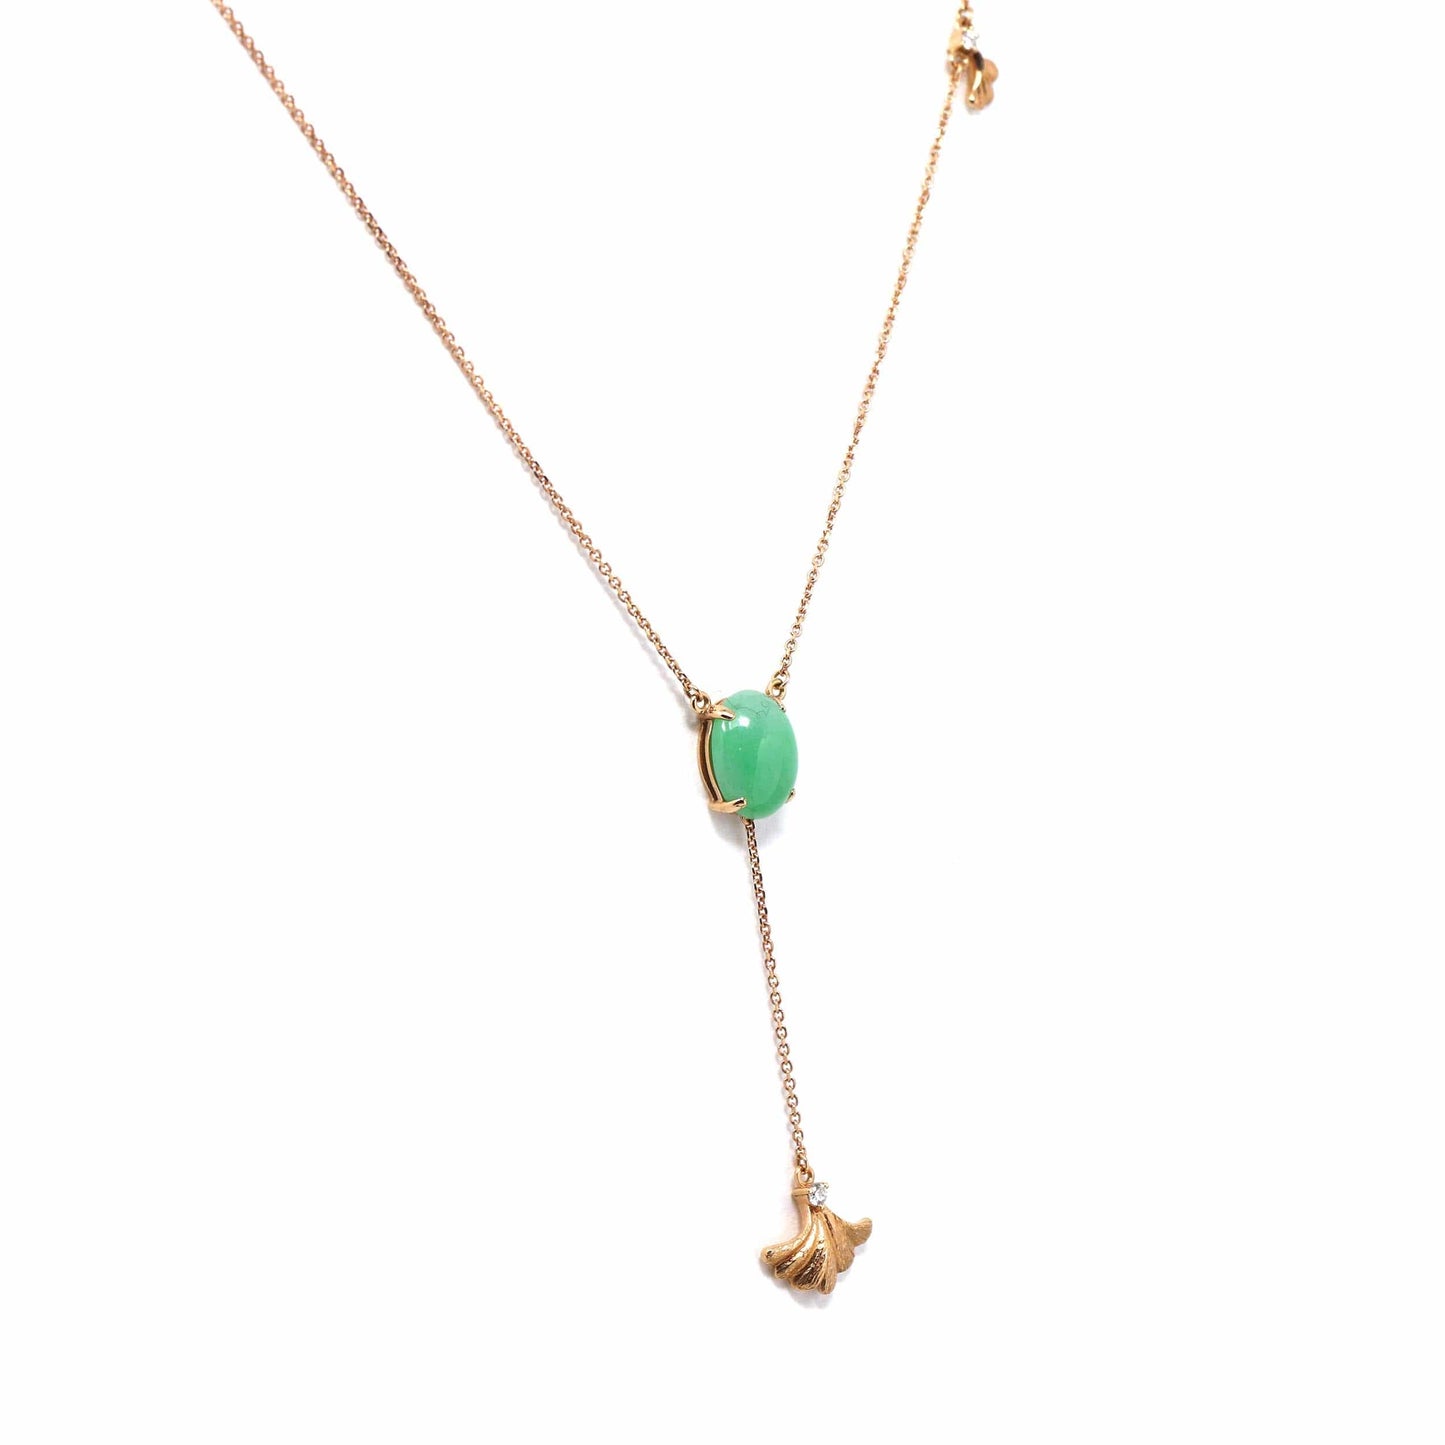 RealJade® Co. Gold Jadeite Necklace  18k Yellow Gold Jadeite Jade Ginkgo Leaf Pendant Necklace with Diamond